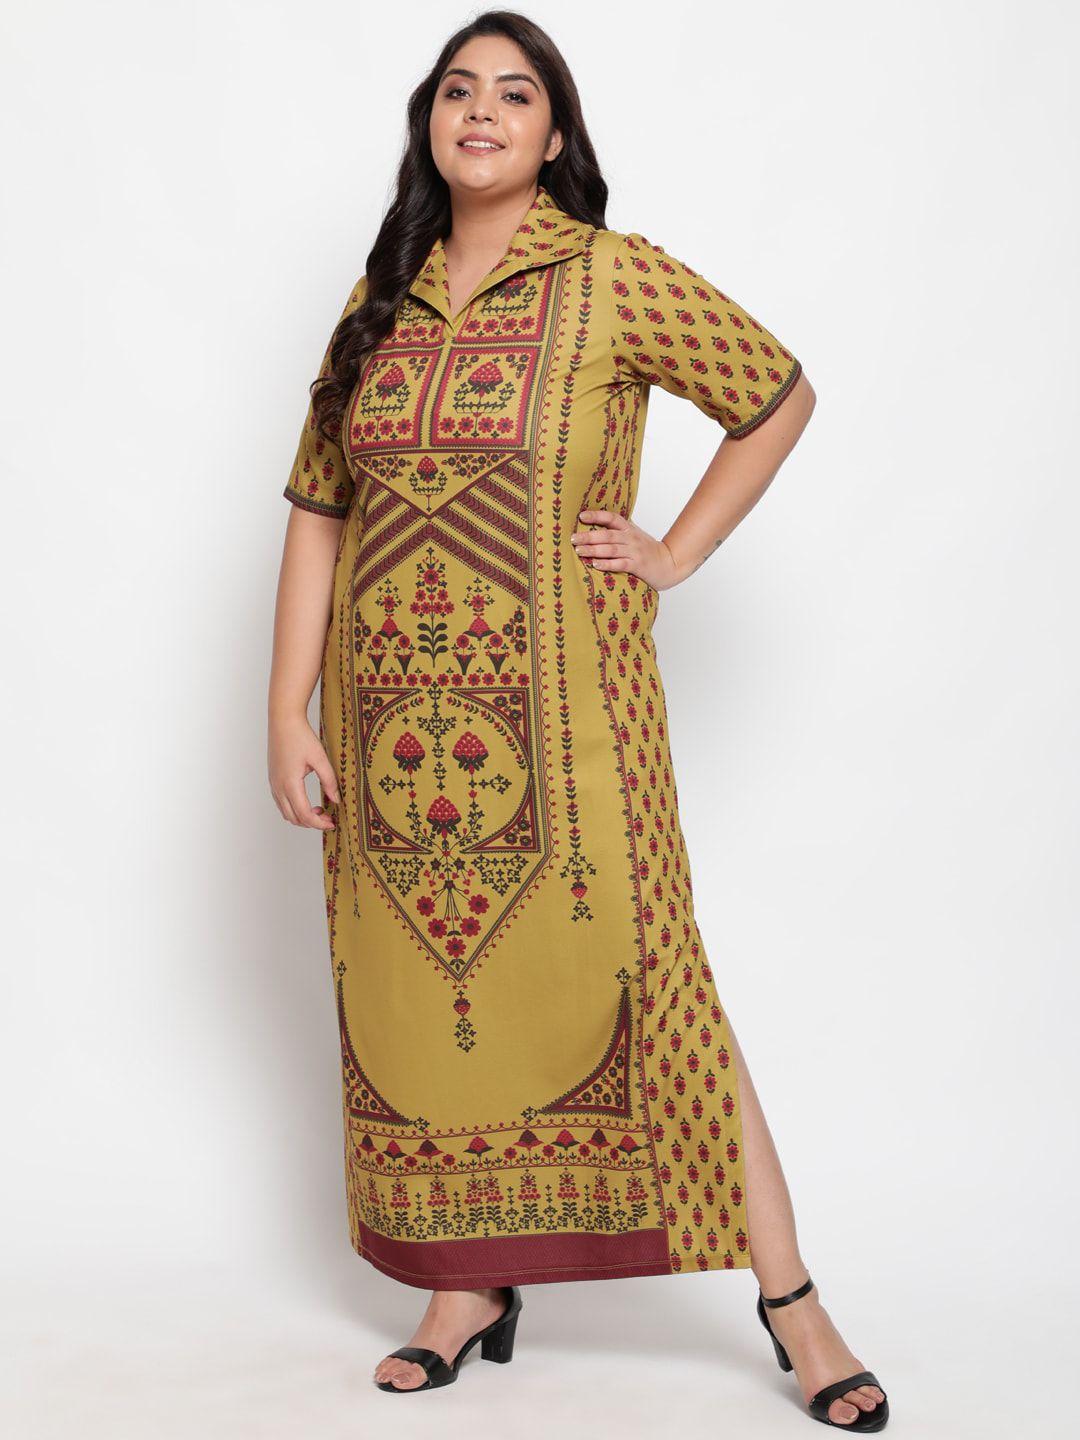 amydus-women-plus-size-mustard-yellow-ethnic-motifs-ethnic-maxi-dress